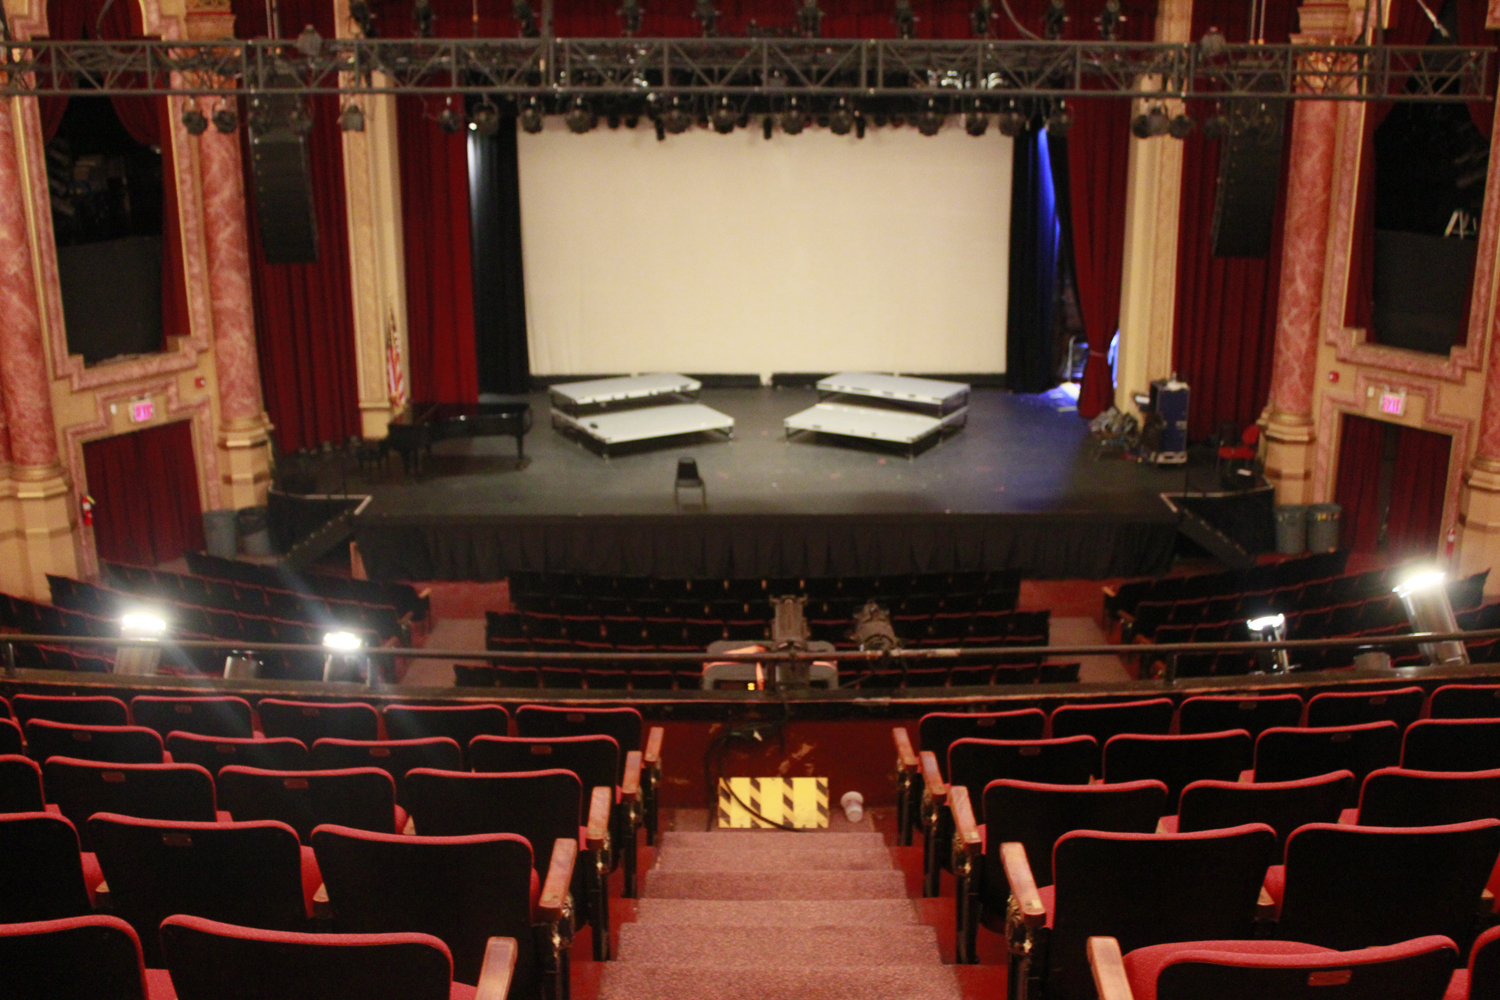 paramount theater seating loge photo view